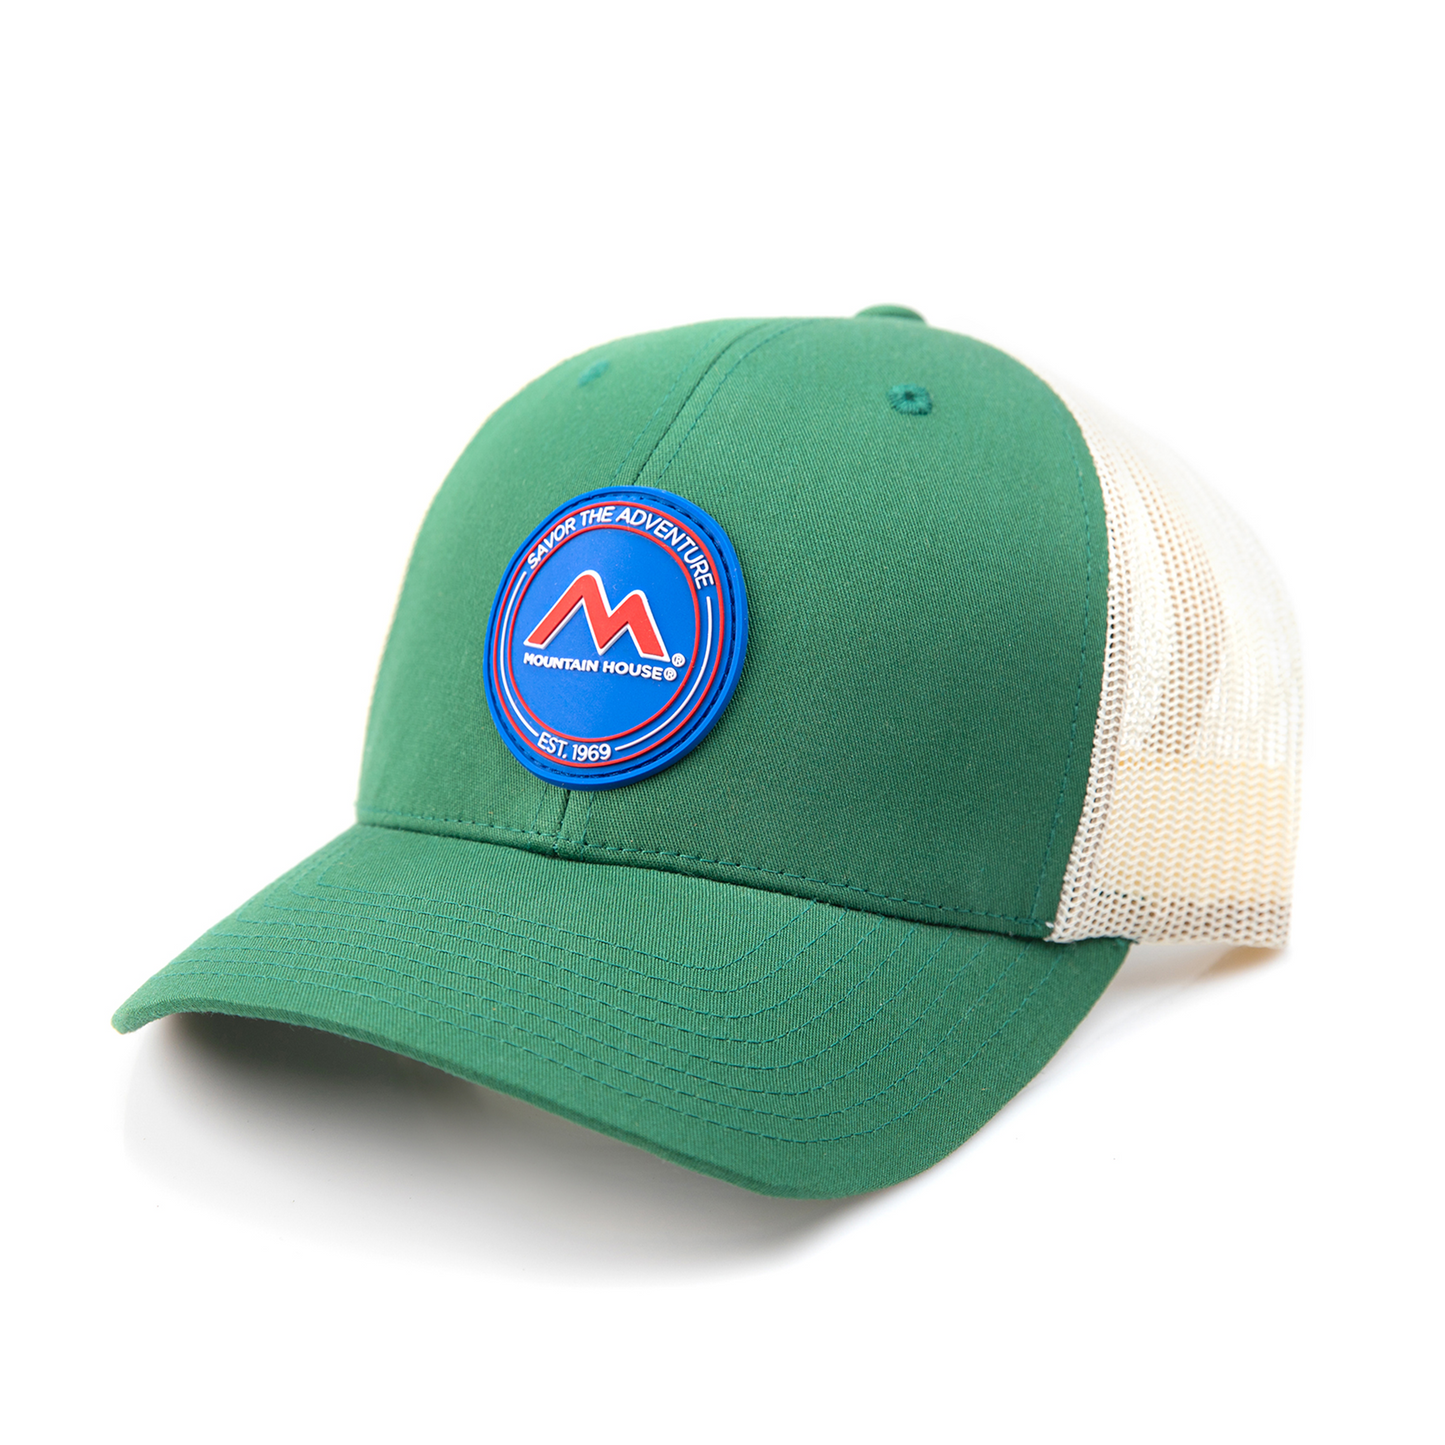 Signature Snapback Hat - Green/Birch